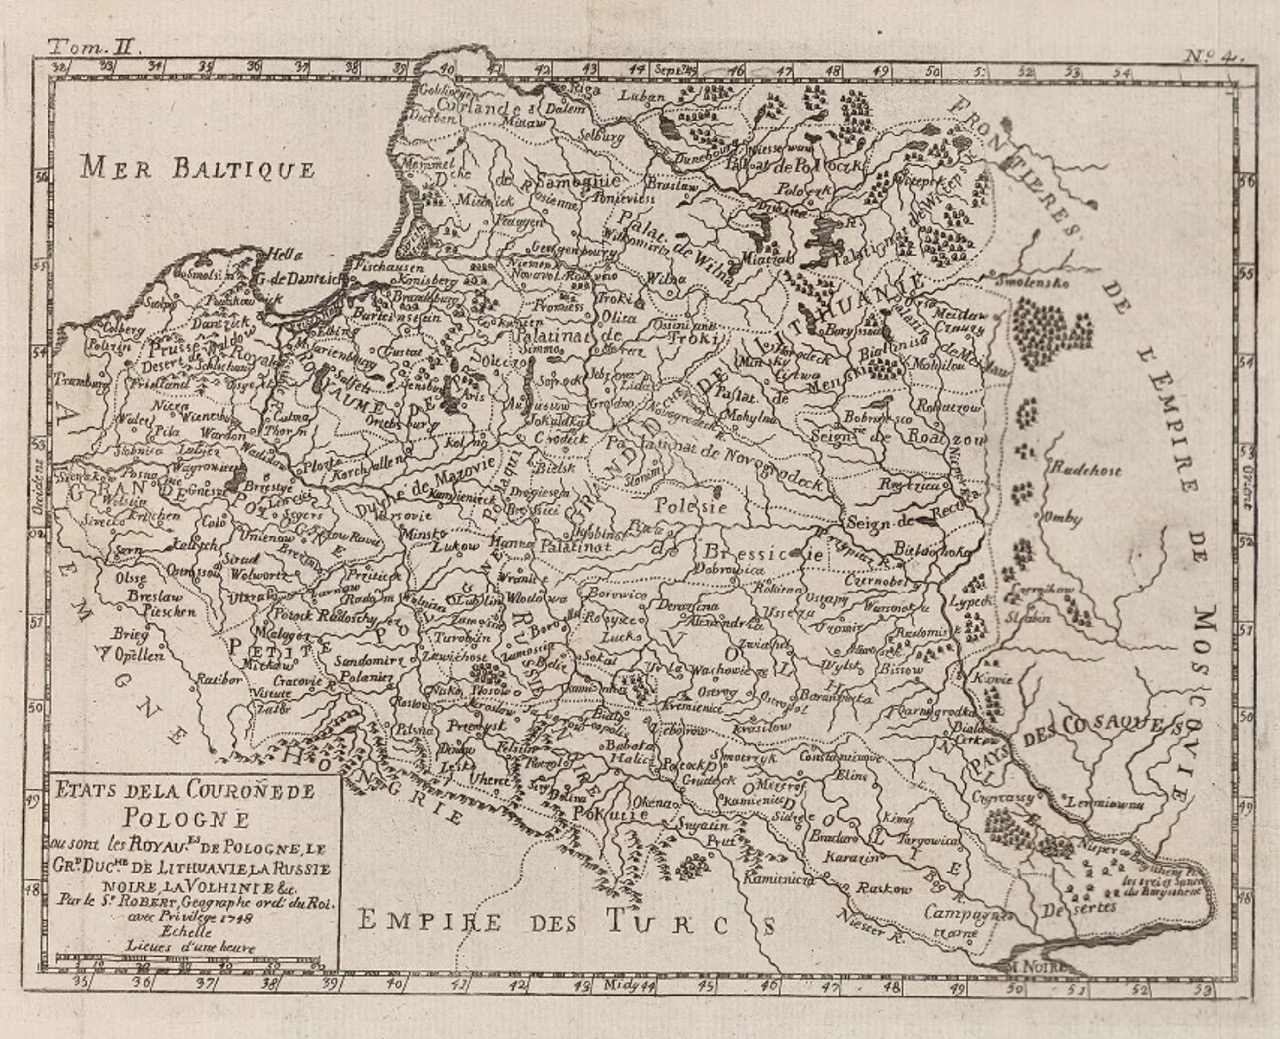 Echard: Carte Geografiche 1771, "Etats de la Couronede Pologne"